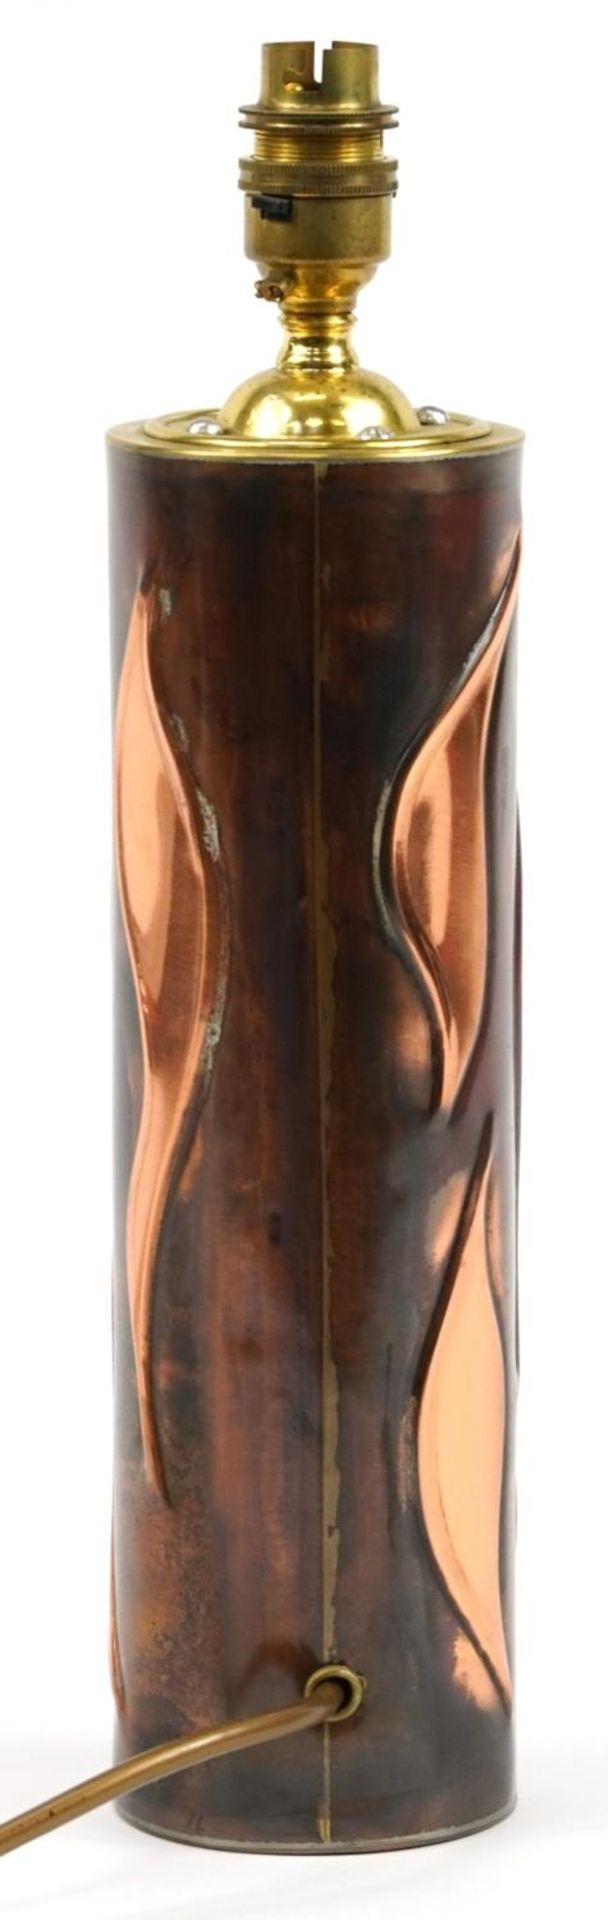 Sam Fanaroff, Arts & Crafts style stylised copper lamp base, impressed SF to the base, 37cm high - Bild 2 aus 3